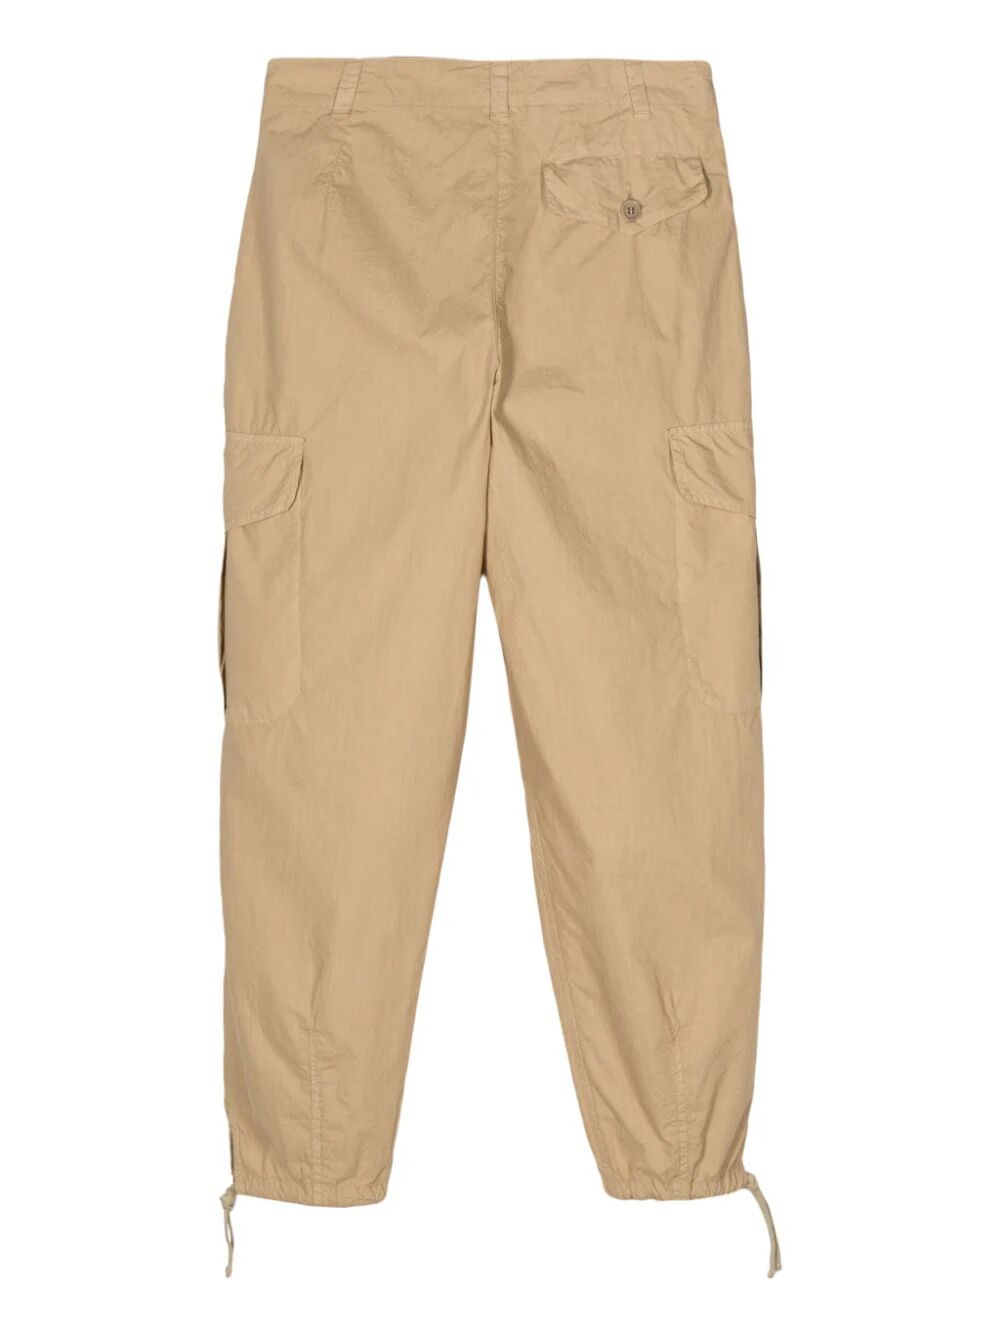 Mod 0169 Pants